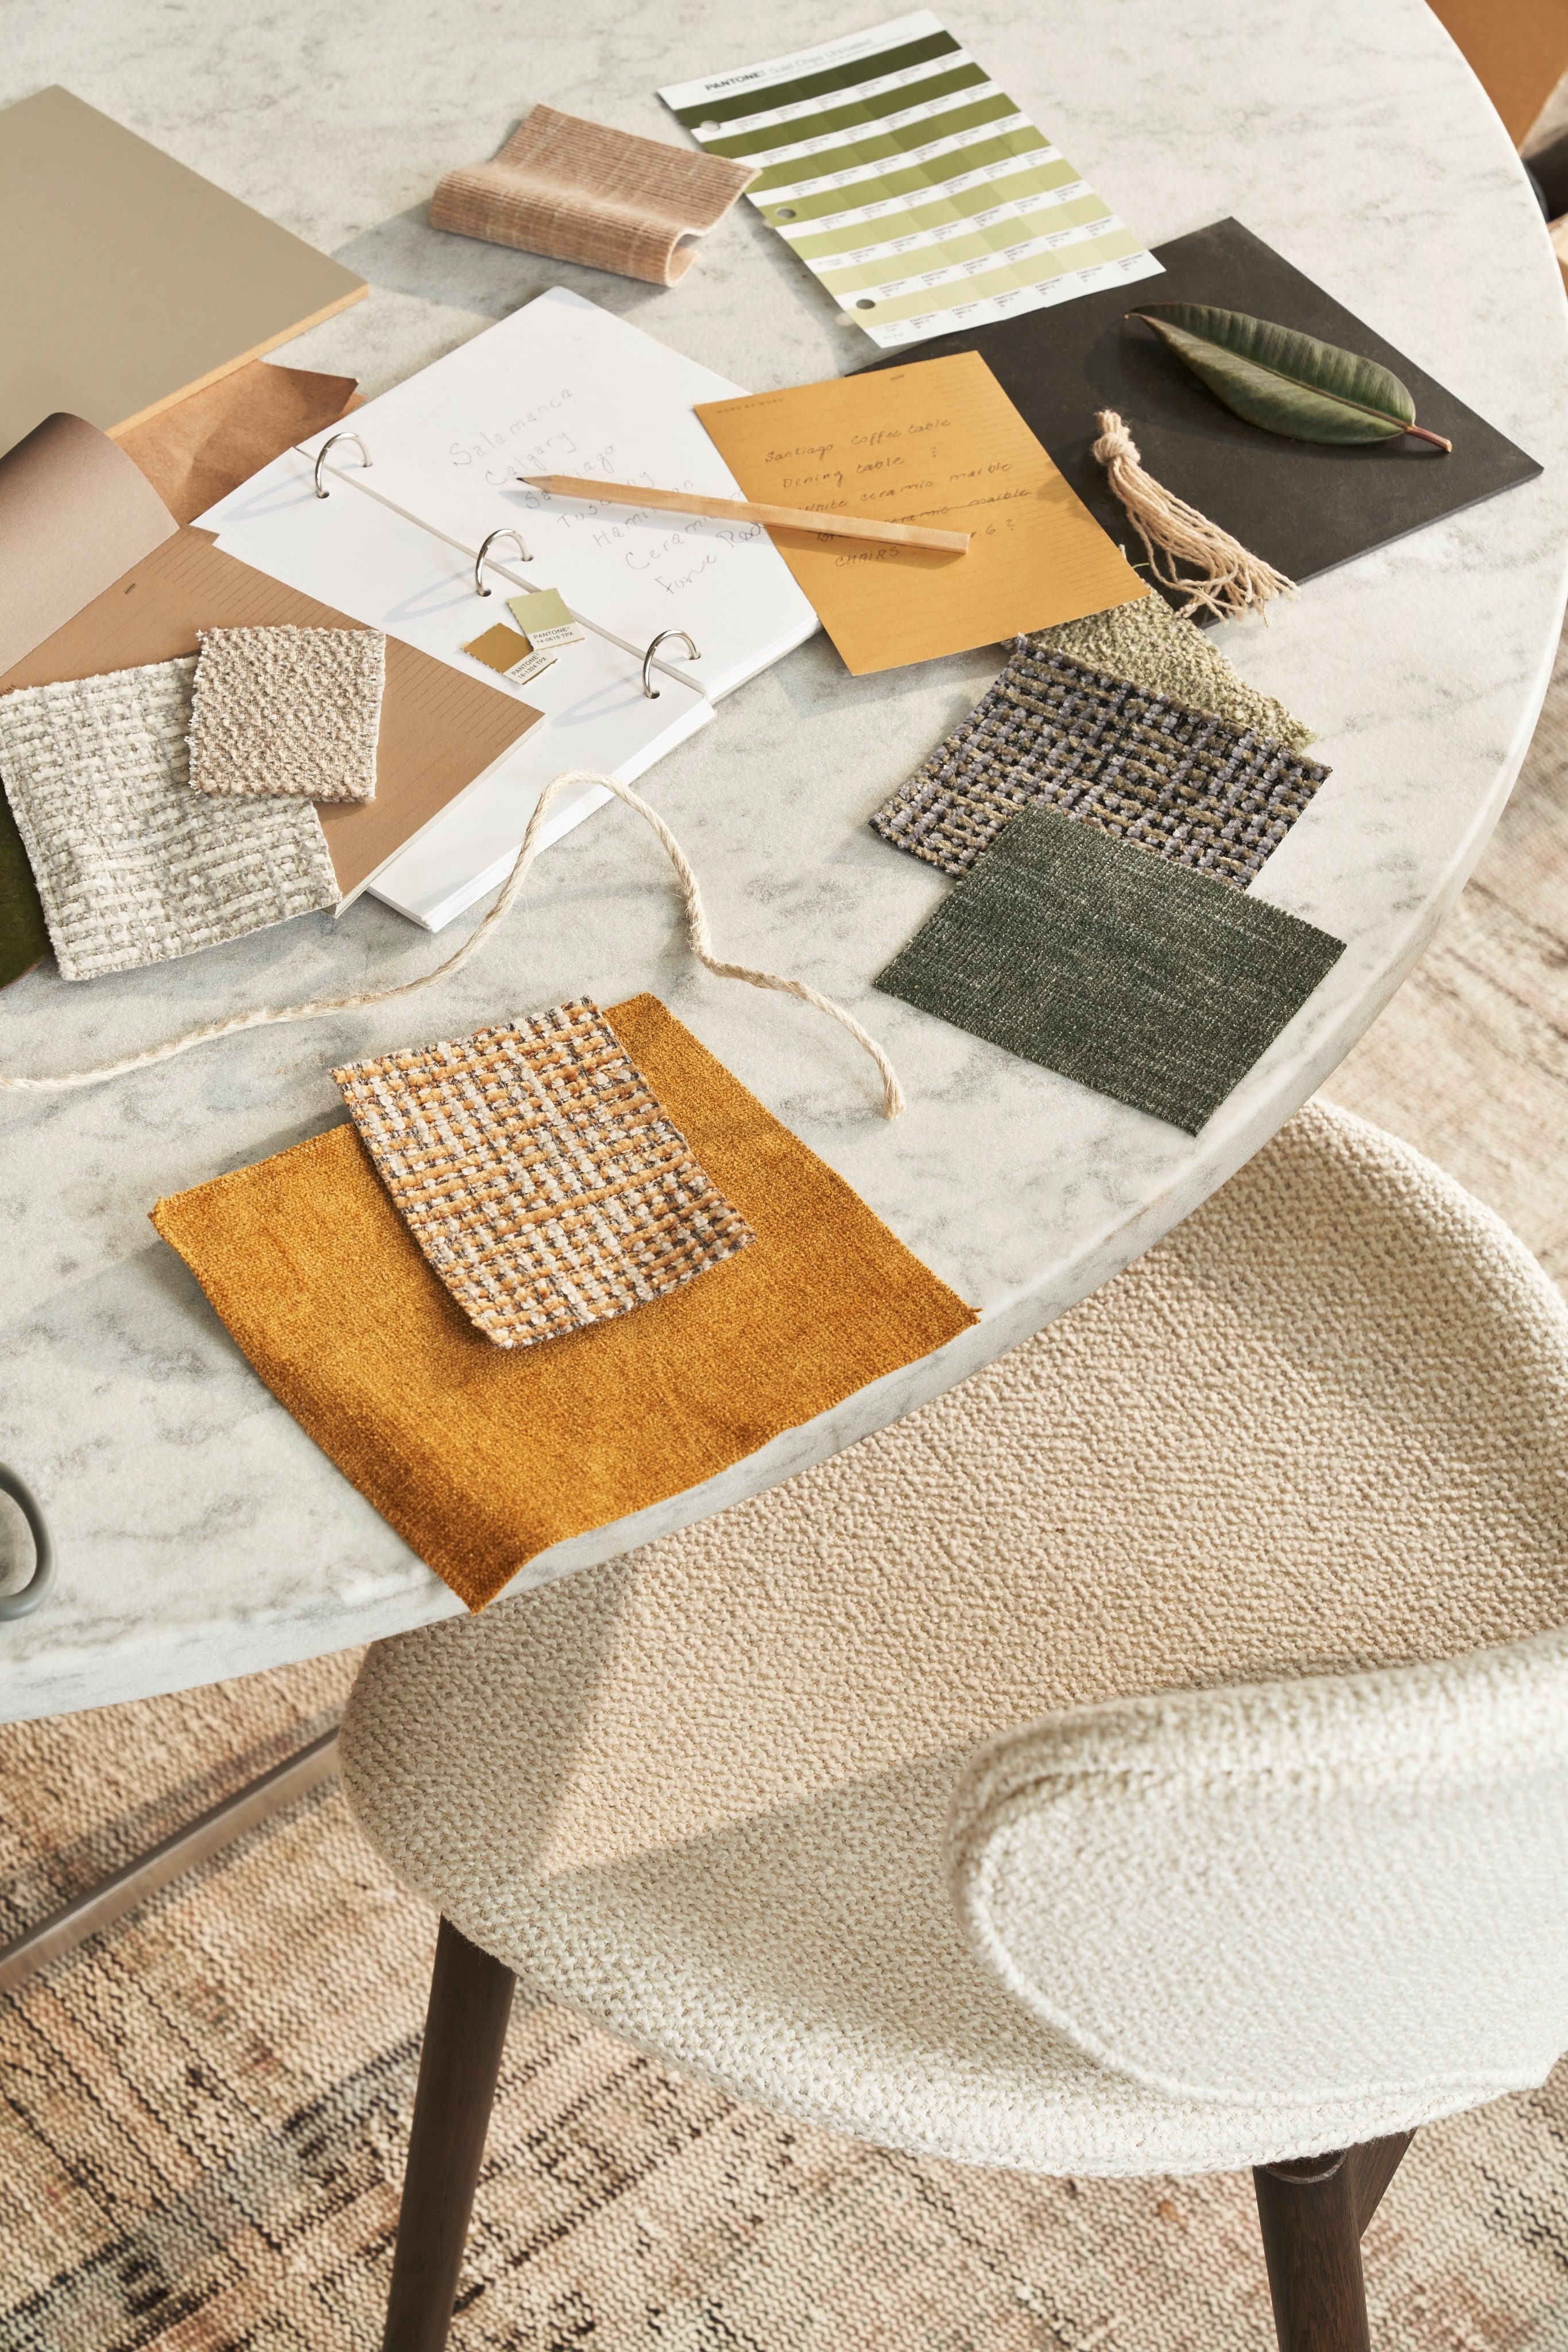 Table en marbre avec échantillons de tissu, cartes de notes et un crayon dans des tons naturels.